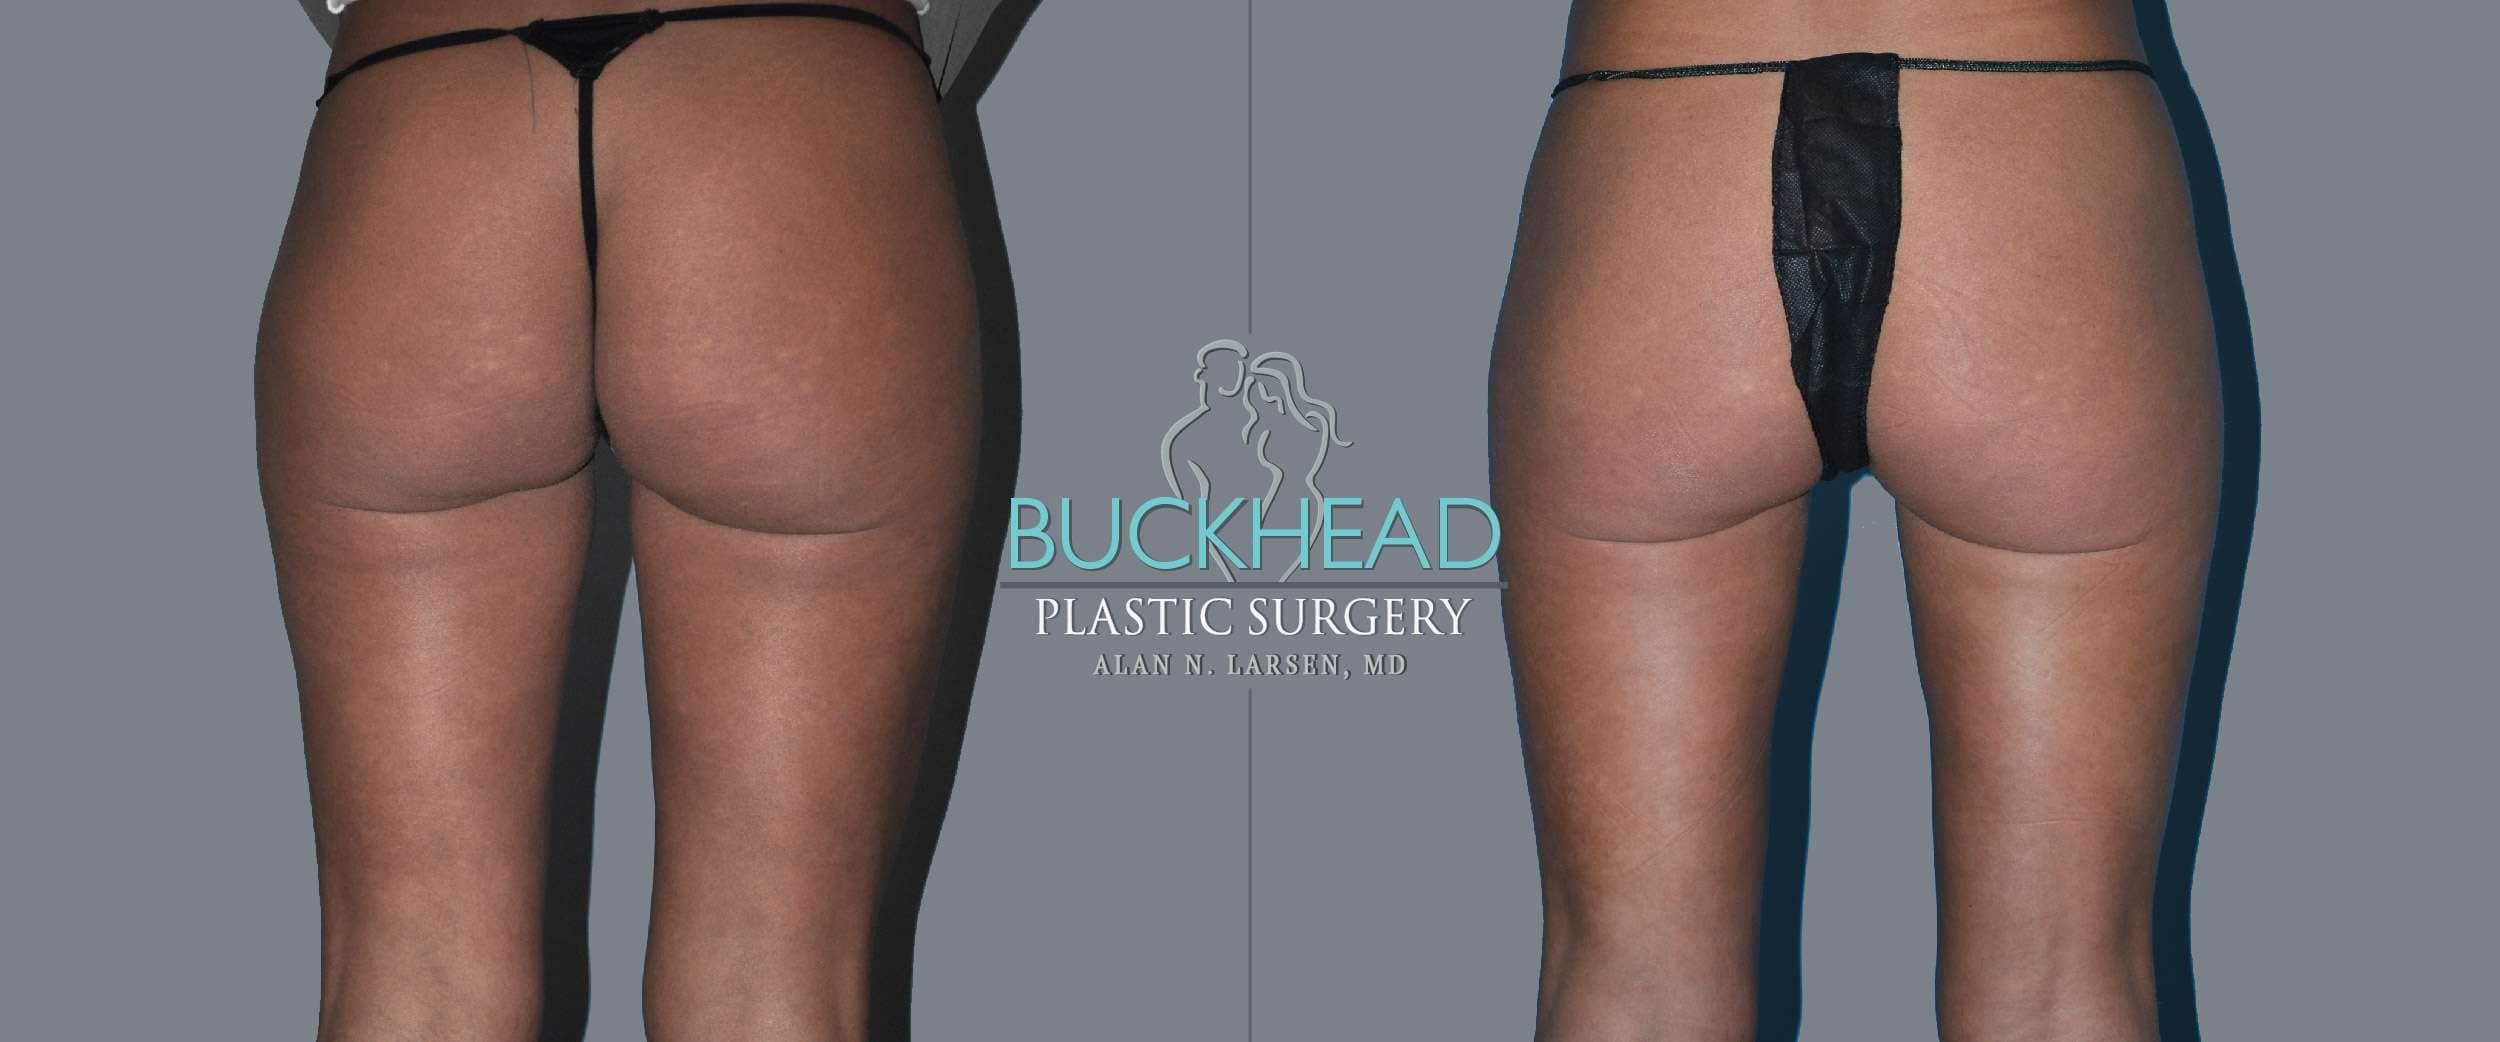 Before and After Photo Gallery | Liposuction - Thigh Back | Buckhead Plastic Surgery | Alan N. Larsen, MD | Board-Certified Plastic Surgeon | Atlanta GA